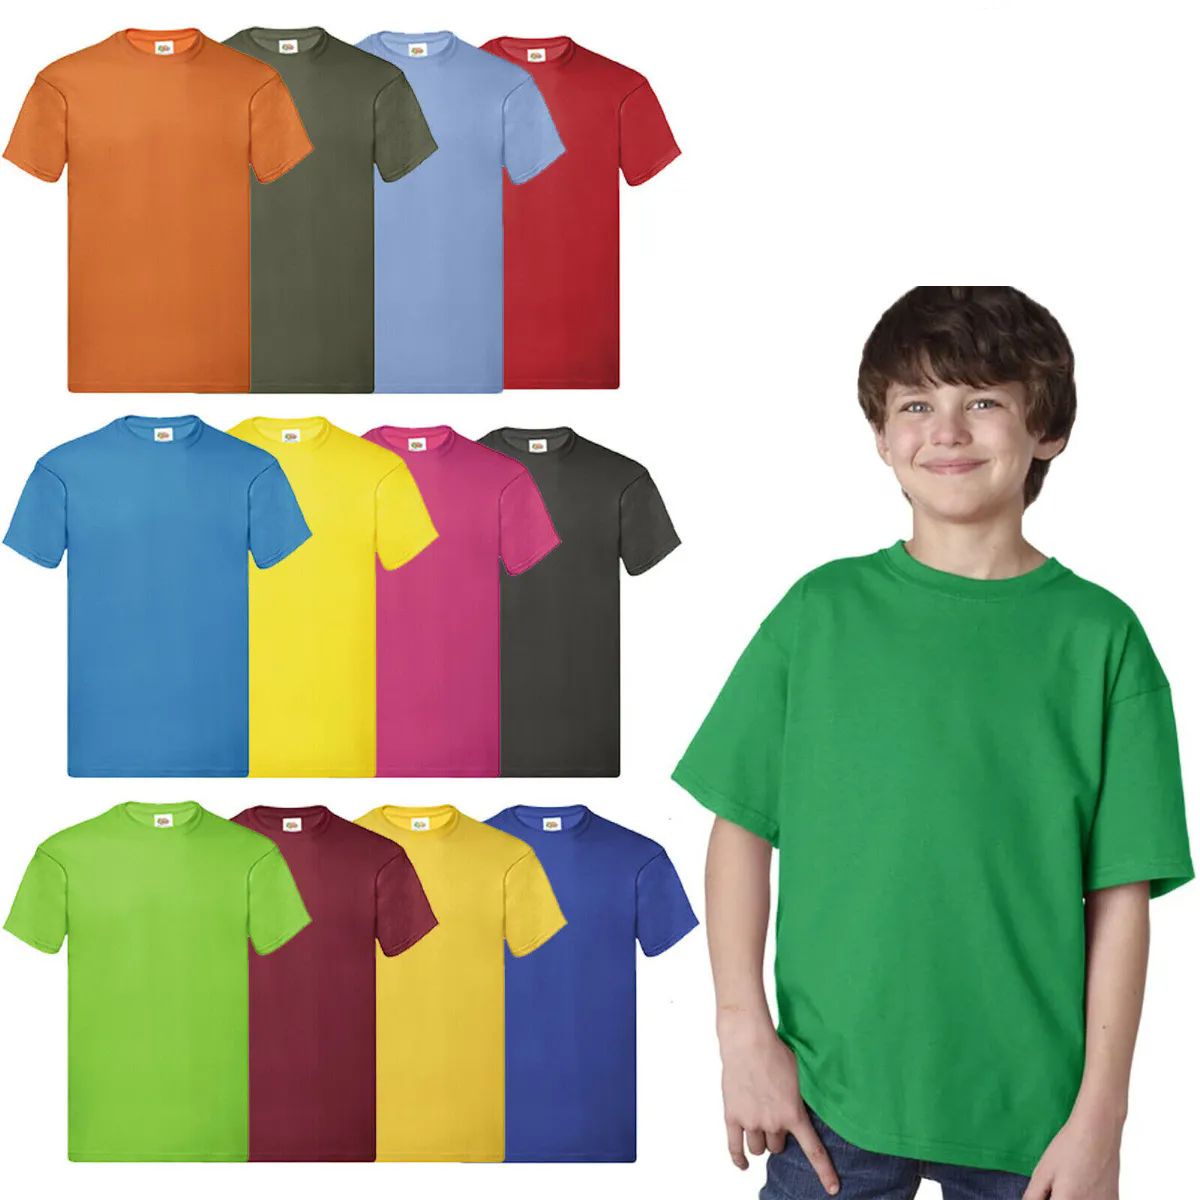 504 Wholesale Billion Hats Kids Youth Cotton Assorted Colors T Shirts Size XL